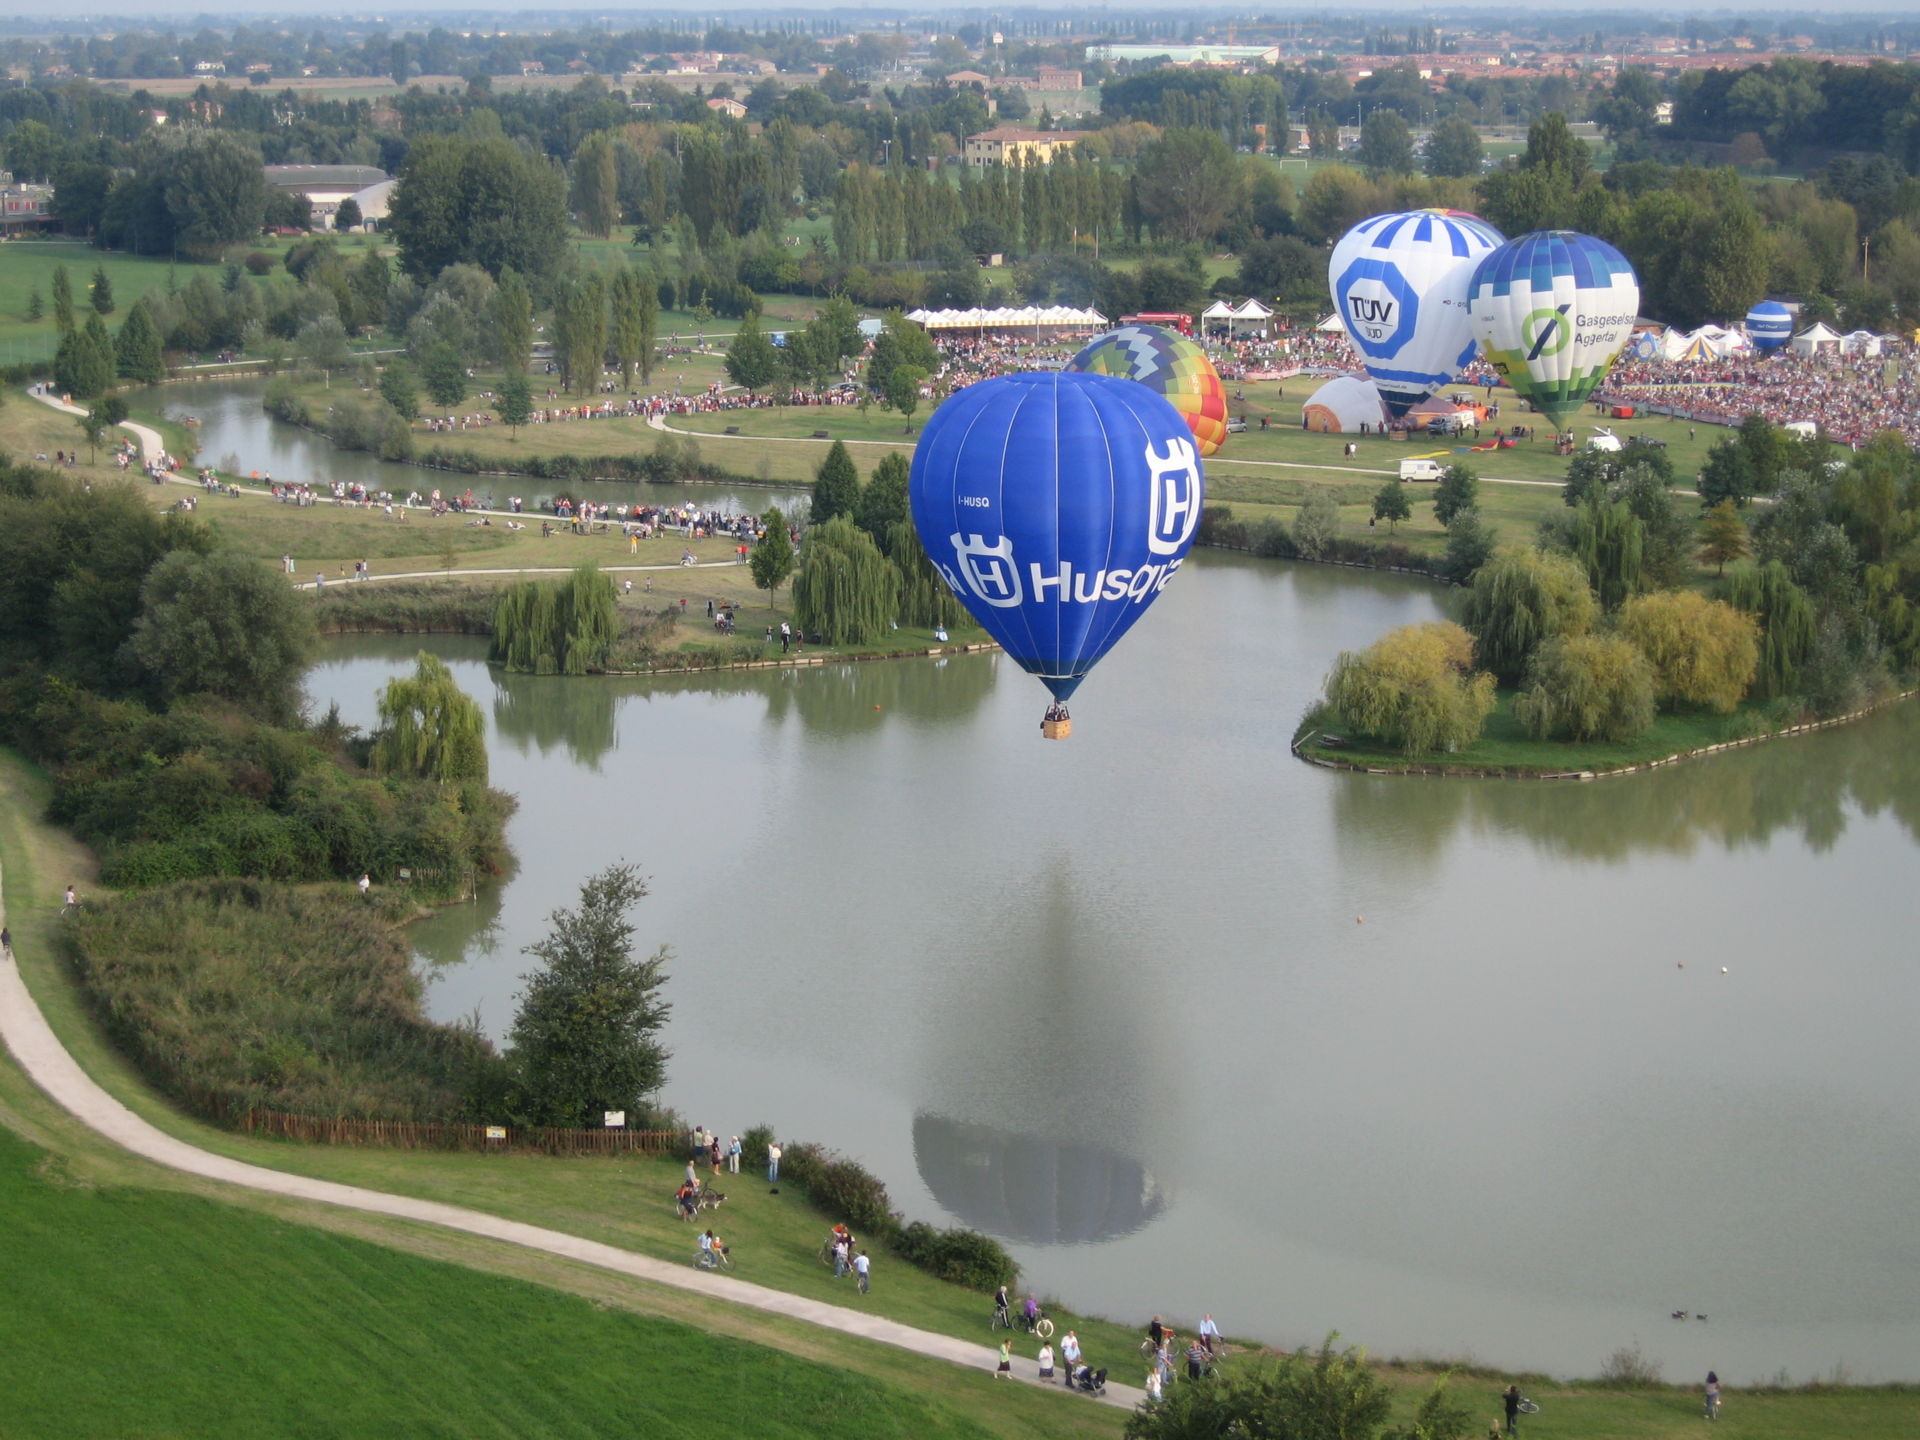 Ferrara Baloons Festival